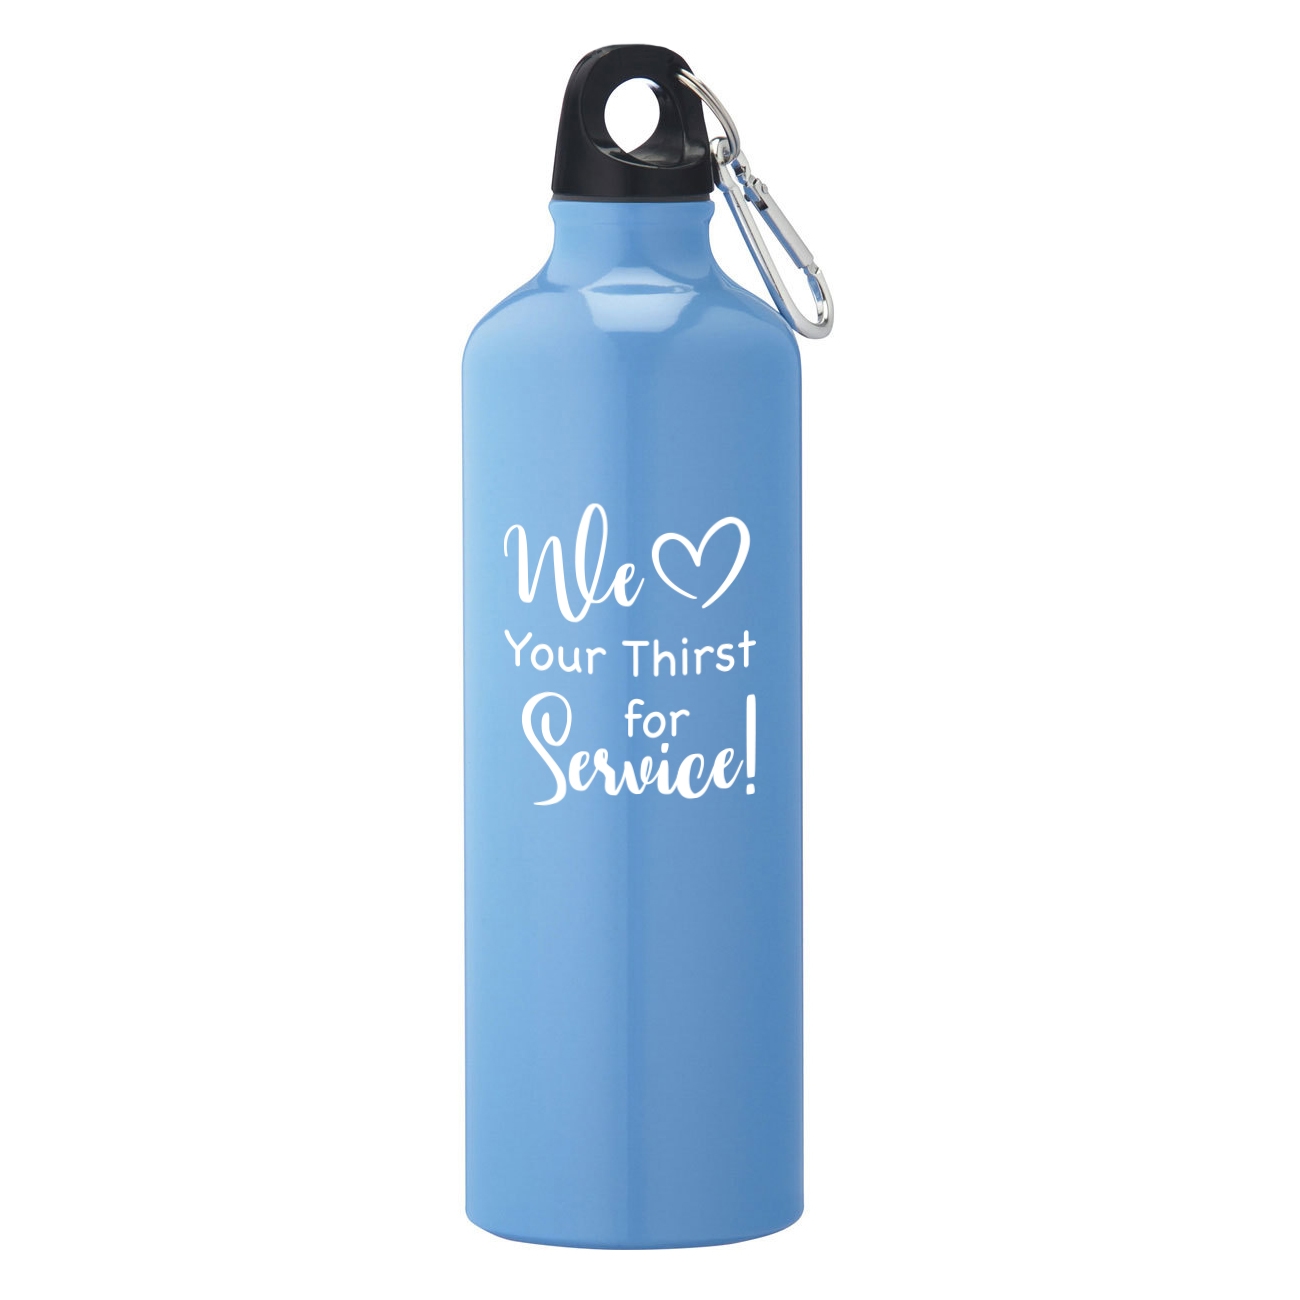 Water bottle with volunteer appreciation logo